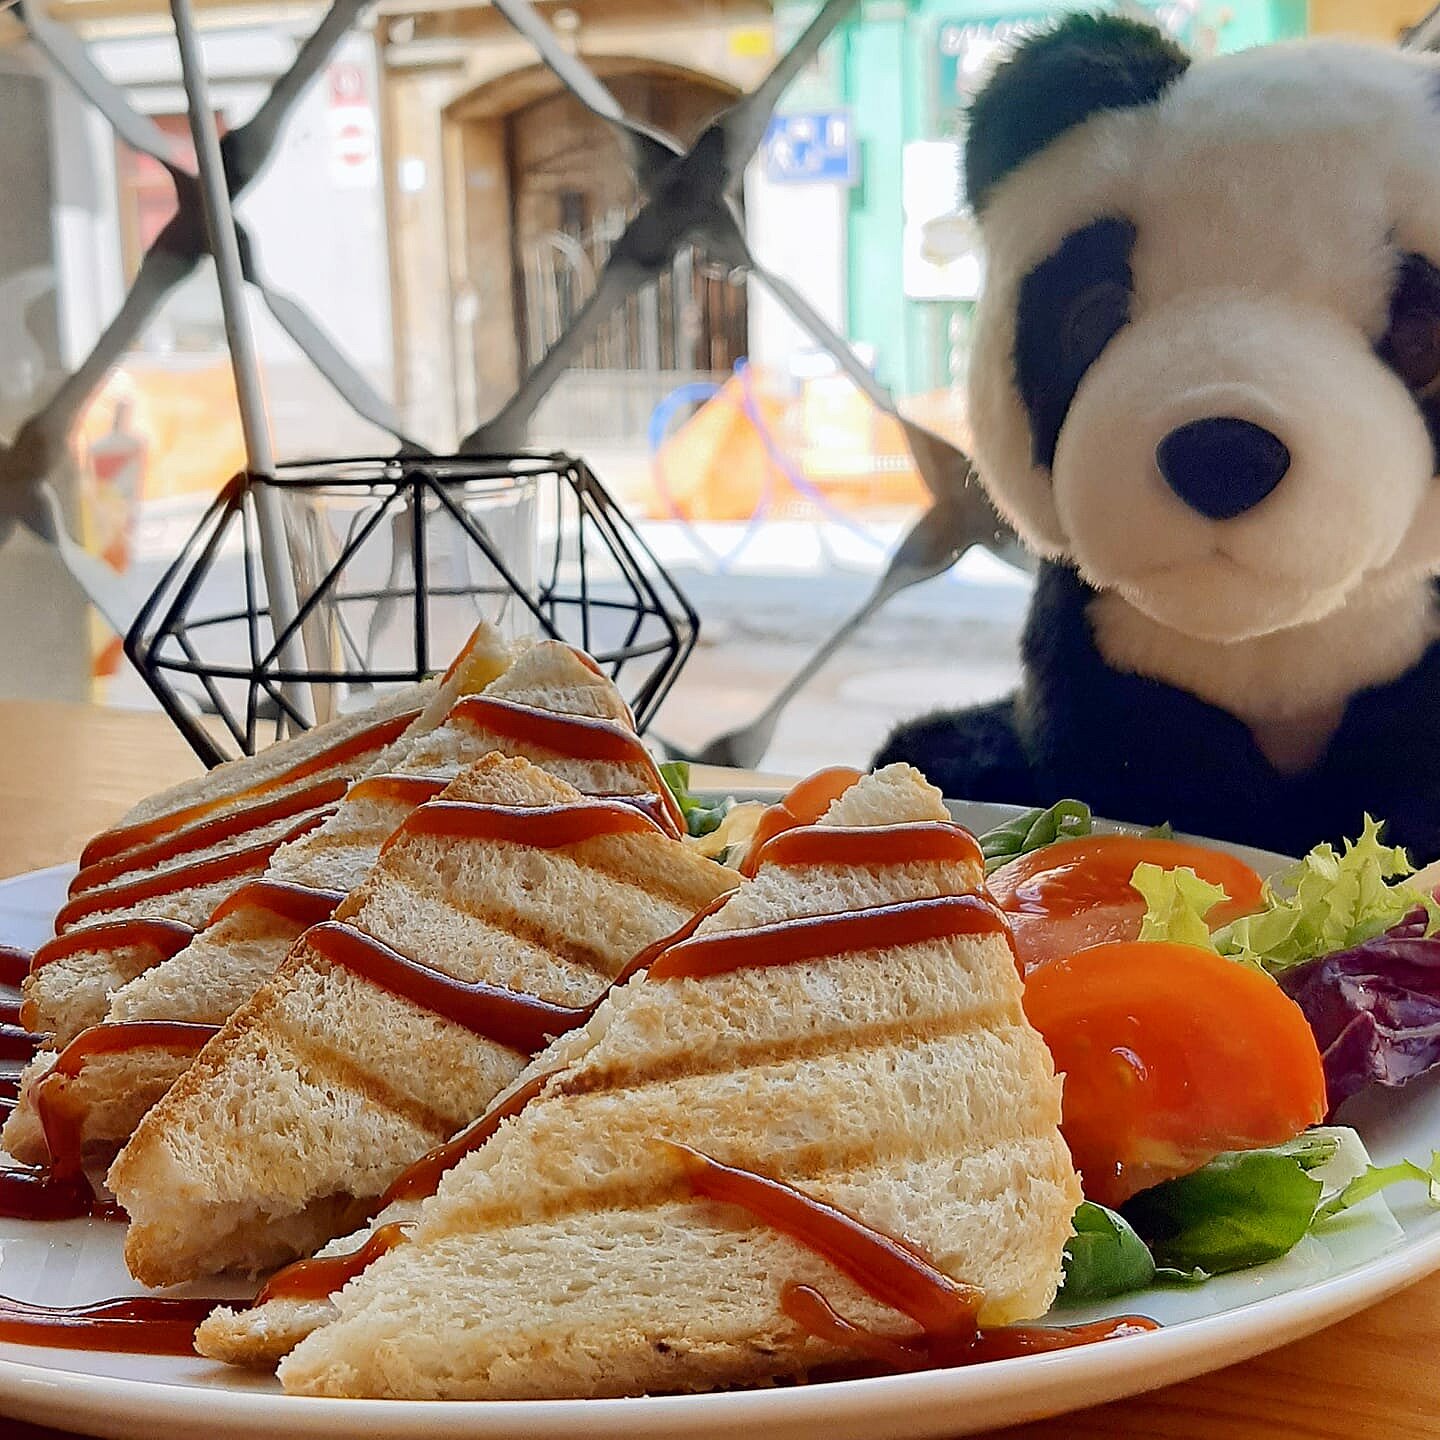 Panda Cafe , fot. archiwum Panda Cafe